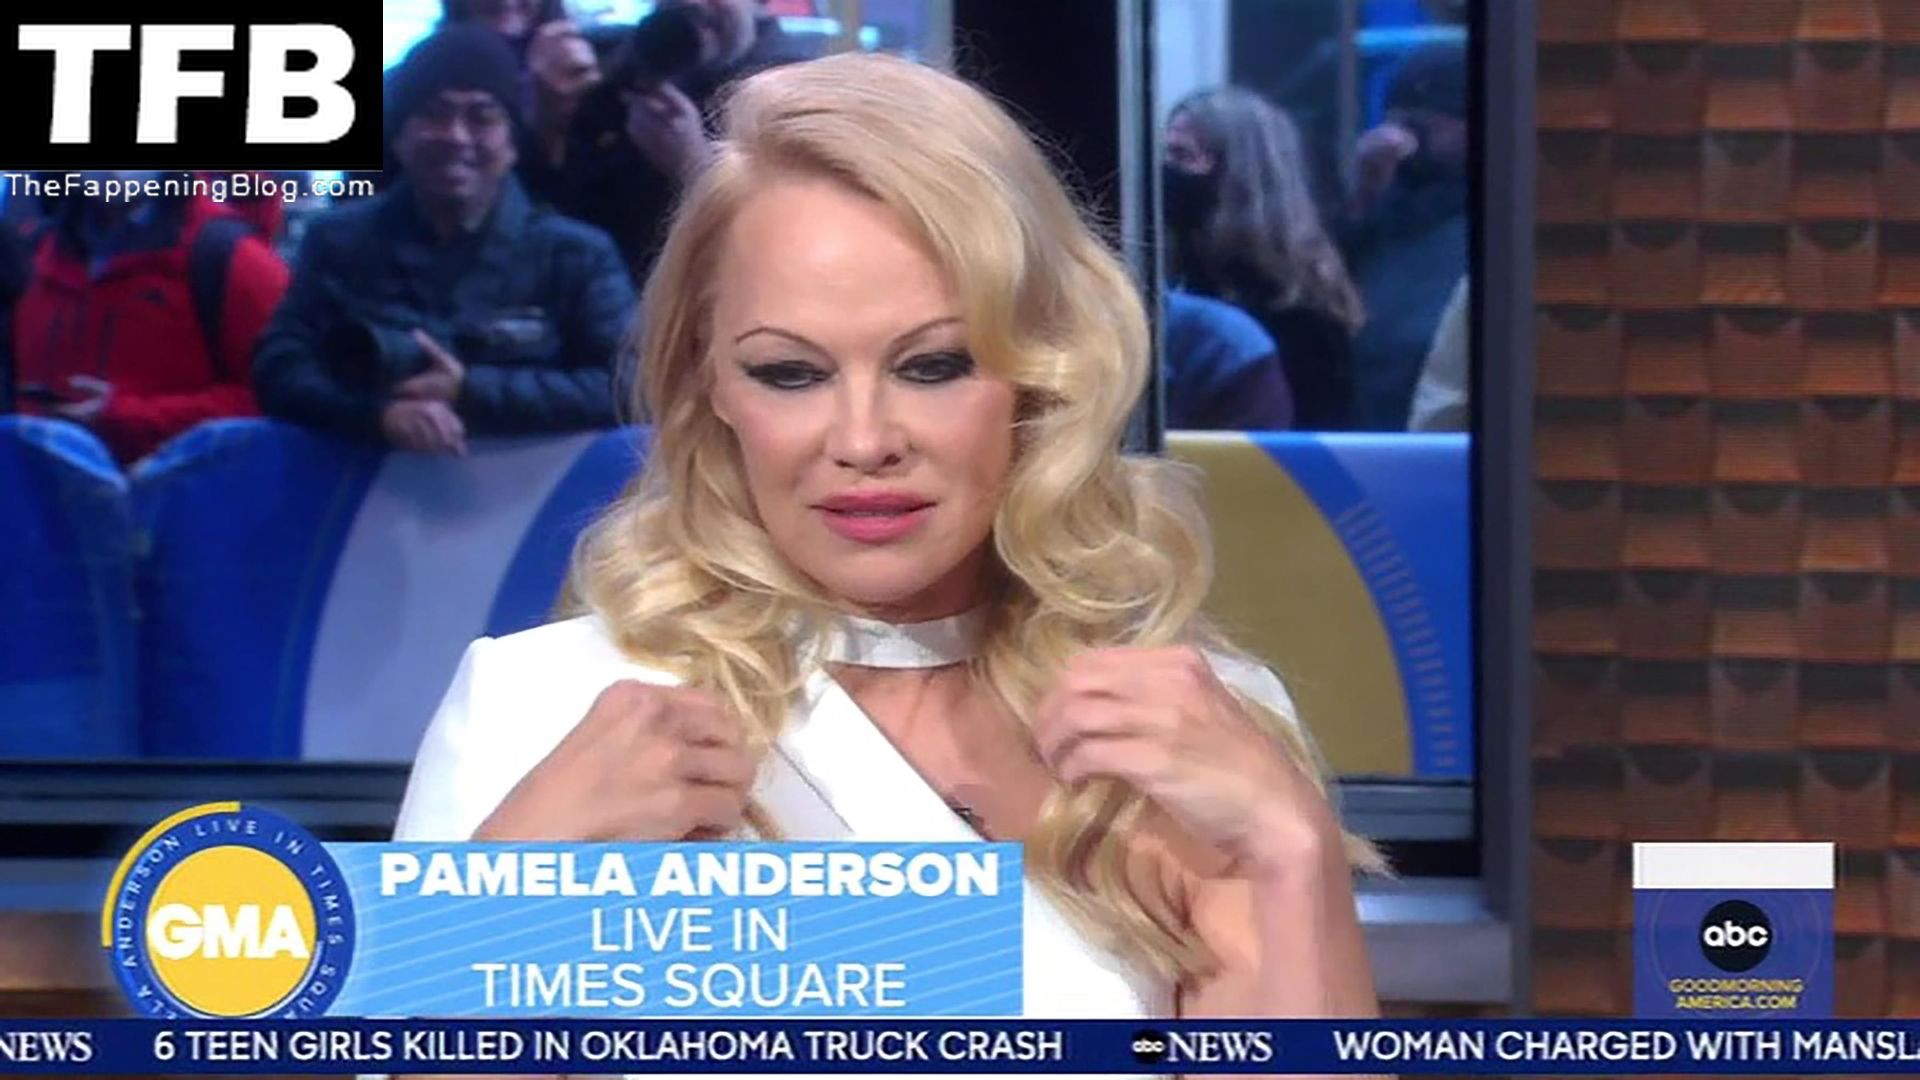 Pamela-Anderson-Hot-The-Fappening-Blog-9.jpg